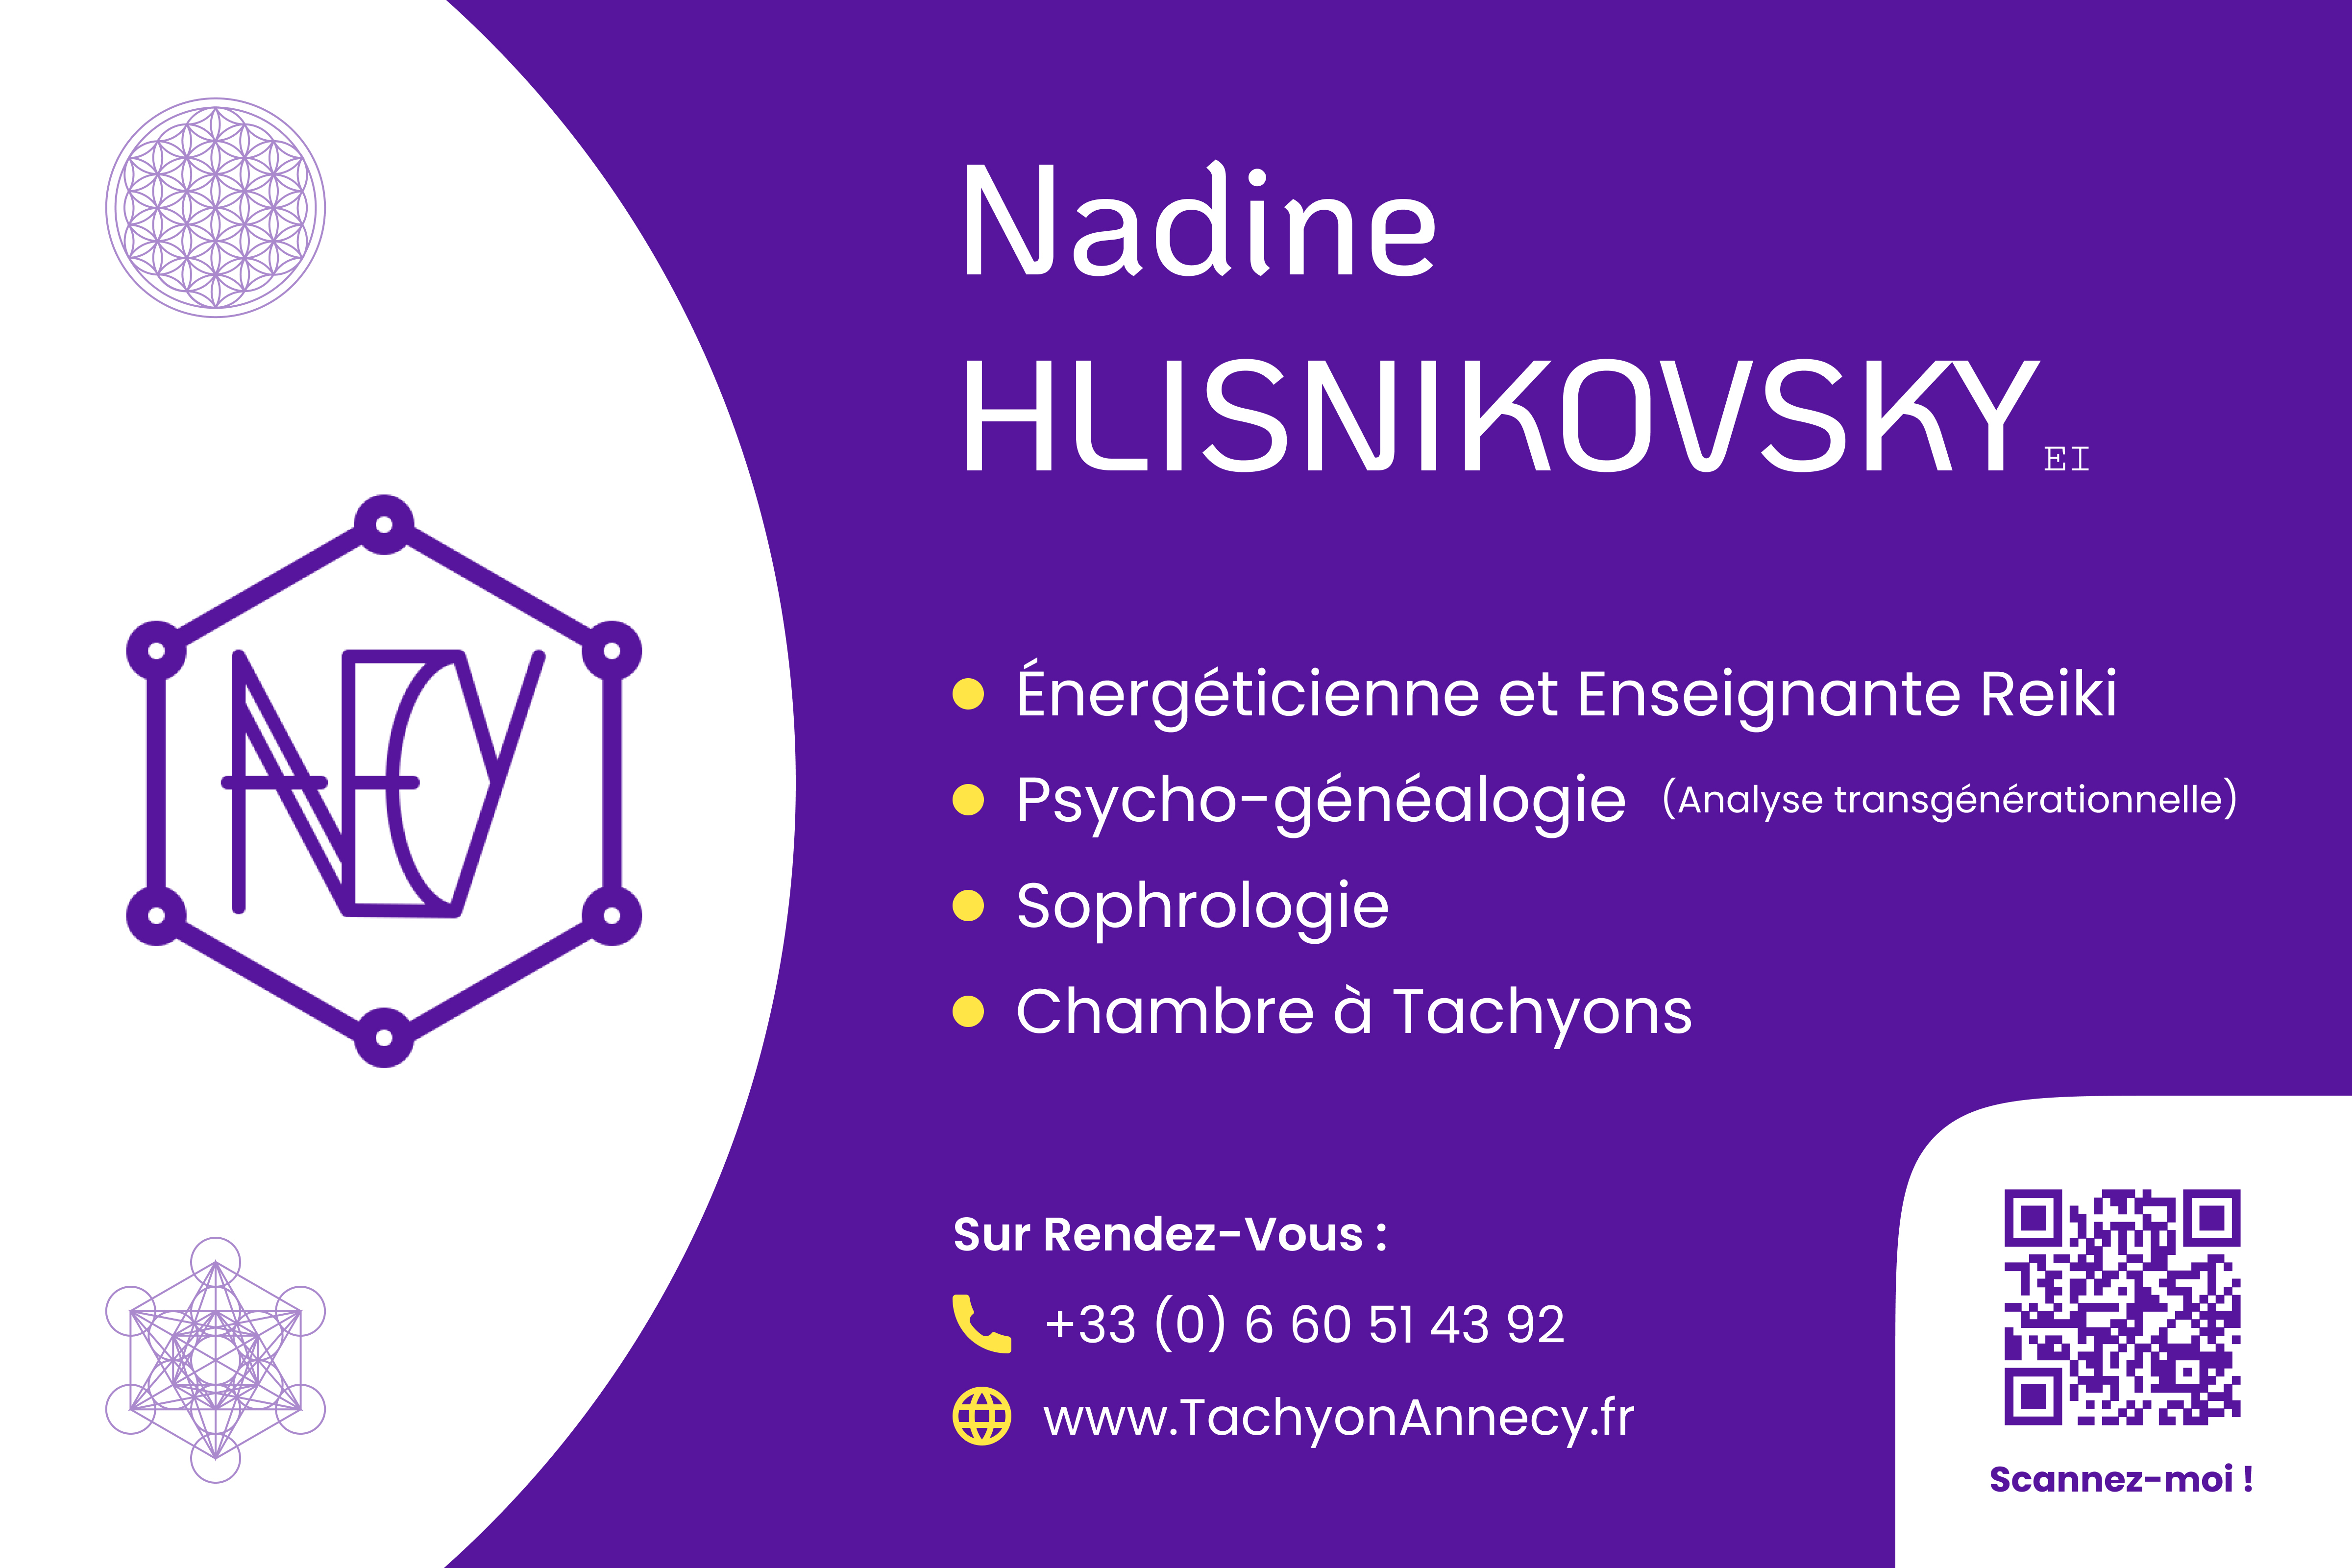 Nadine HLISNIKOVSKY – Reiki